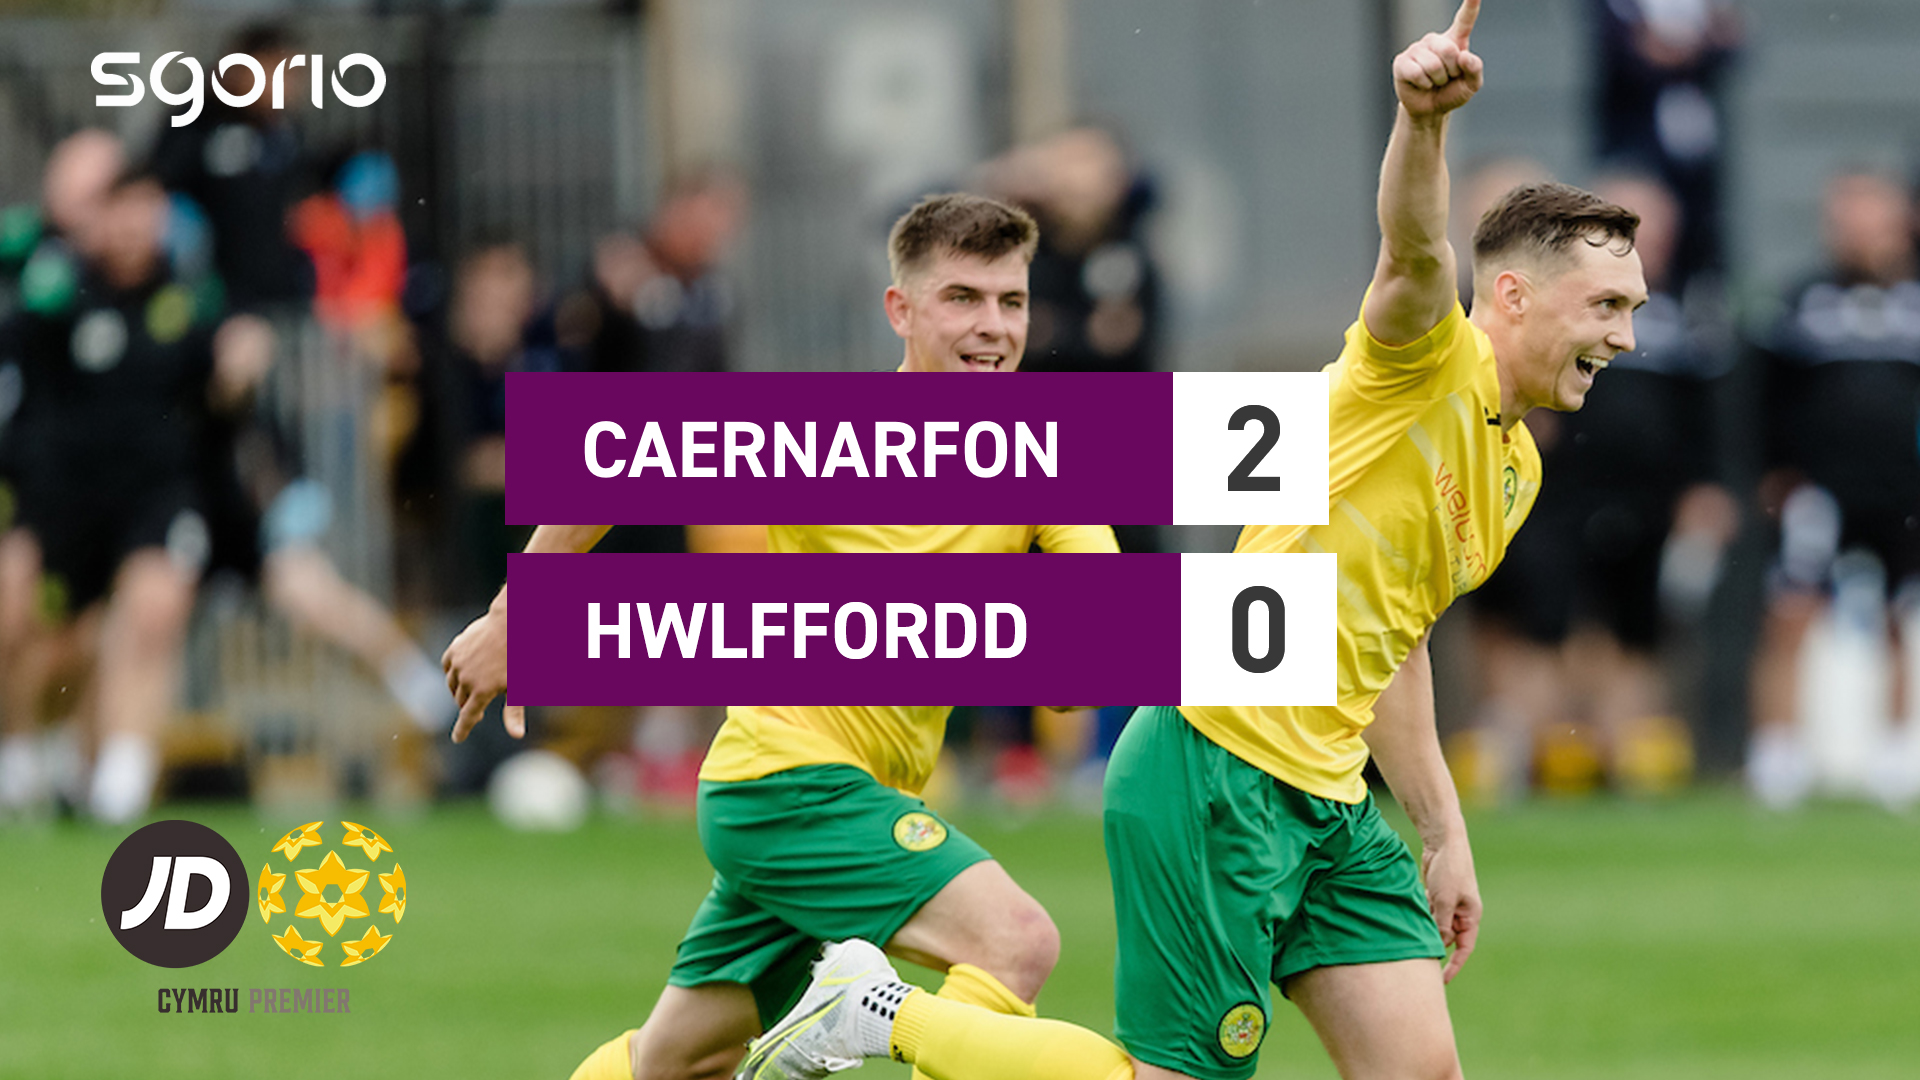 Caernarfon 2-0 Hwlffordd